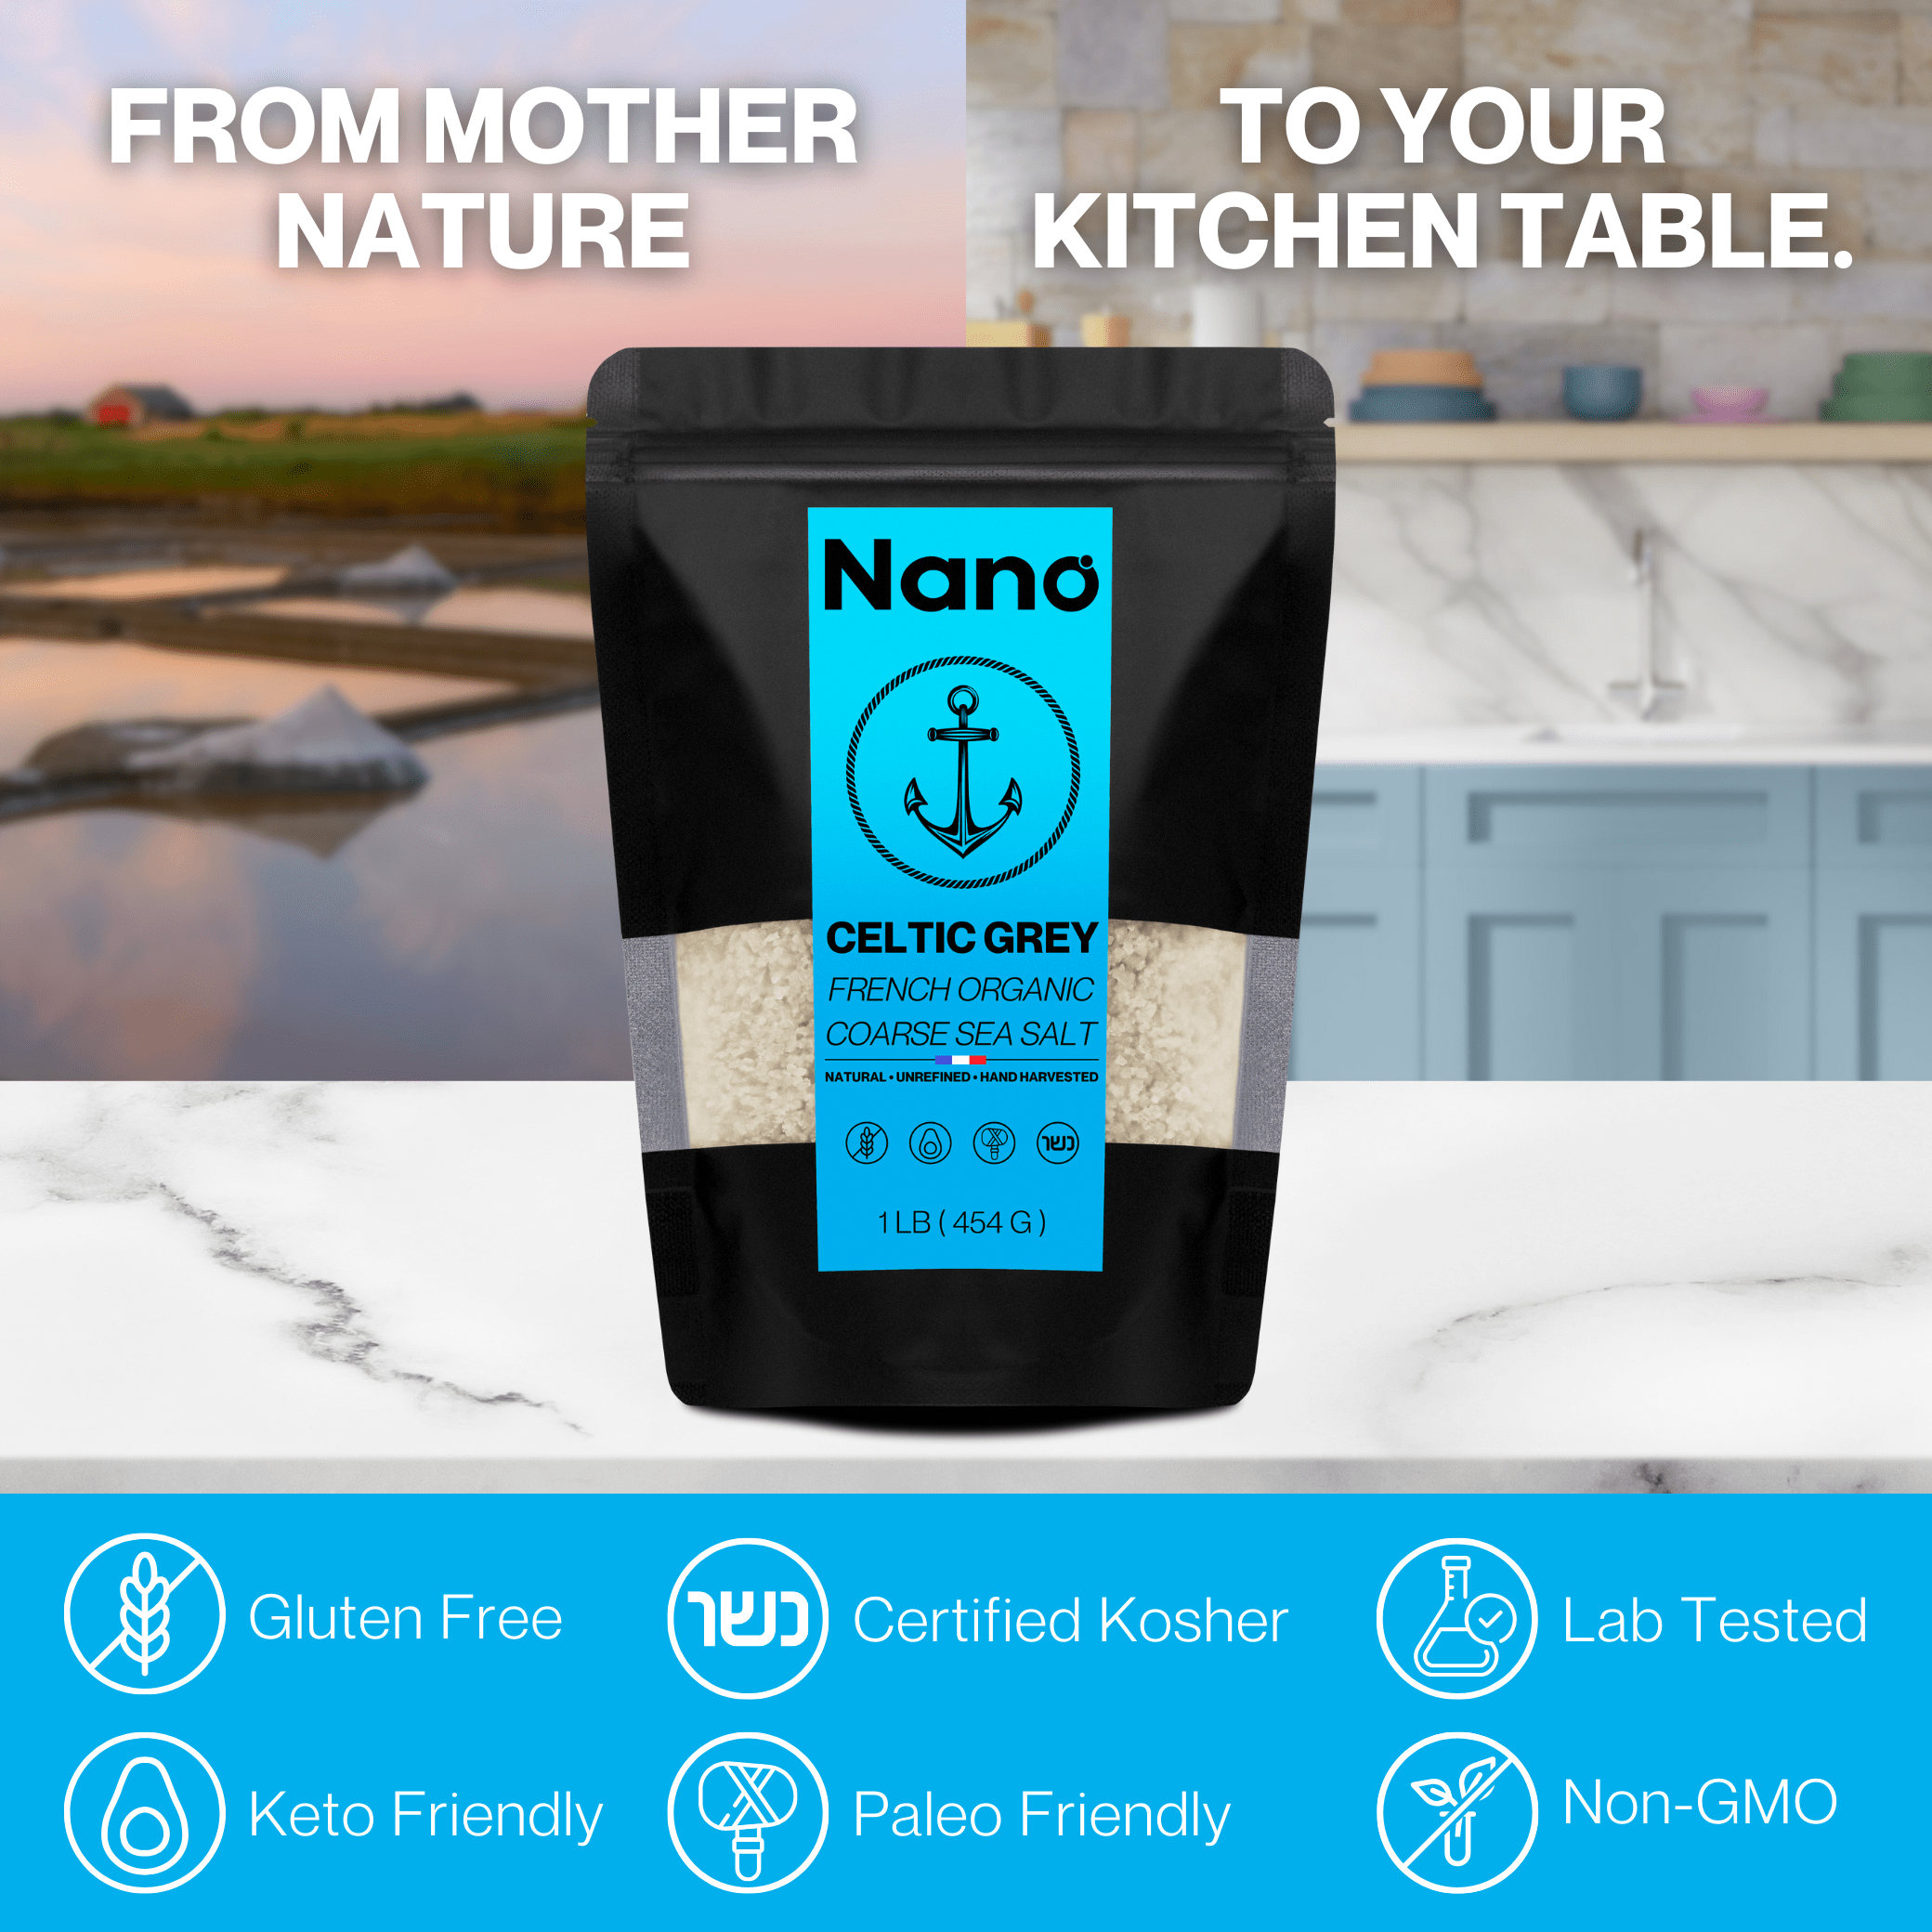 Nano Celtic Sea Salt is gluten free, certified kosher, lab tested, keto friendly, paleo friendly, non GMO